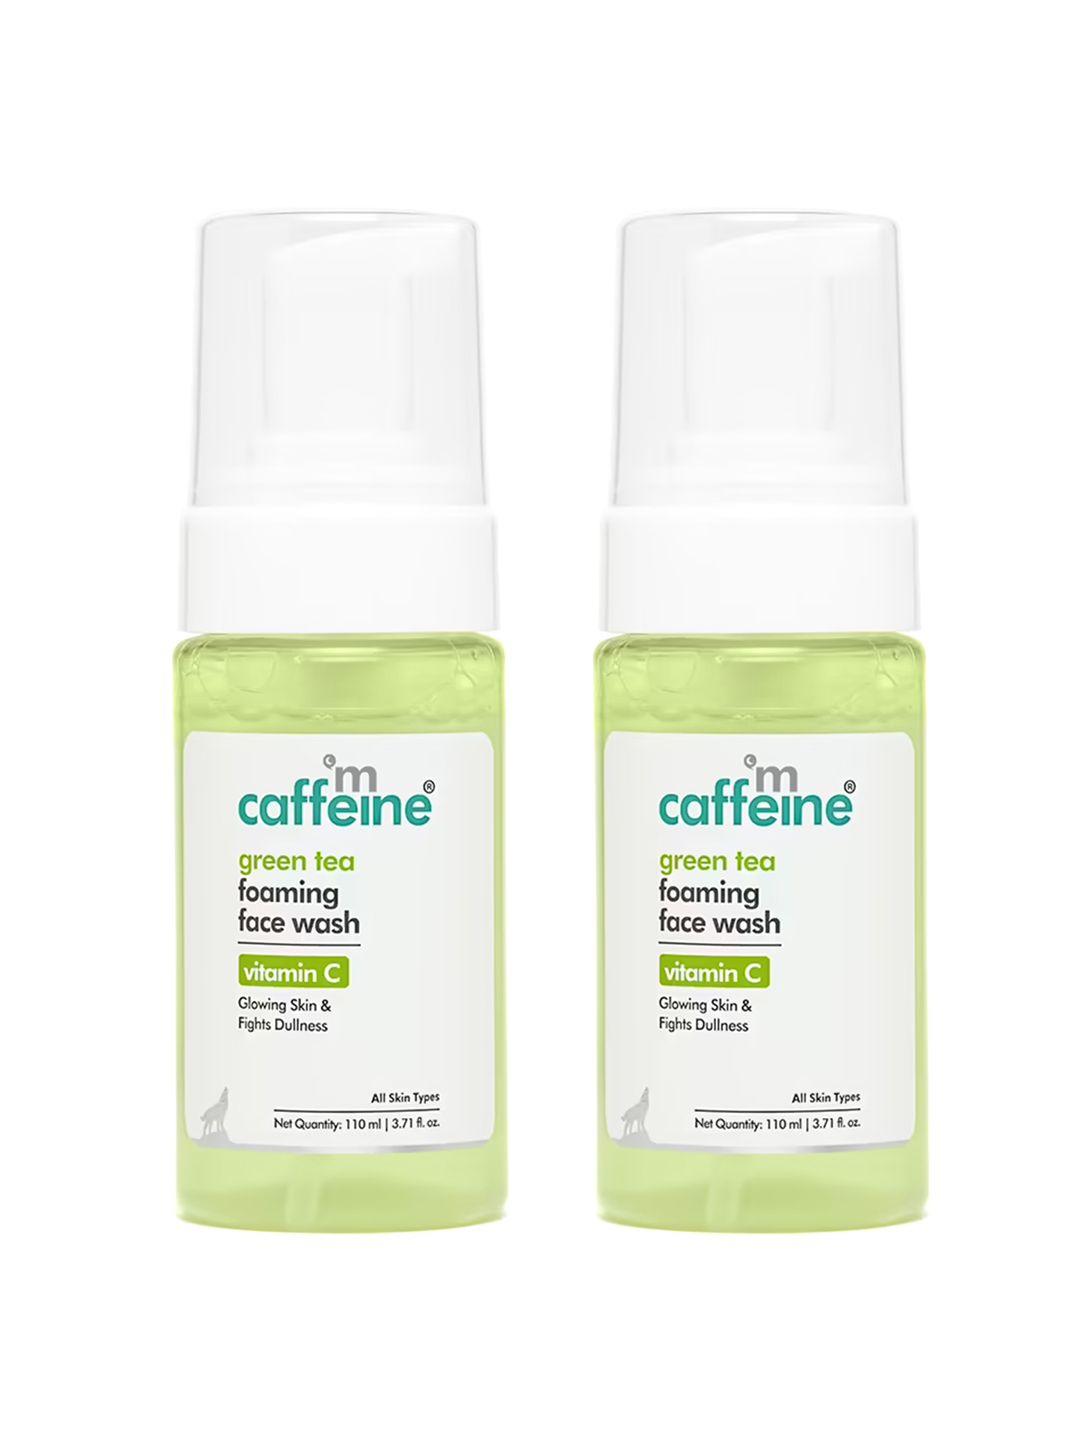 mcaffeine set of 2 green tea foaming face wash with vitamin c & caffeine - 110 ml each